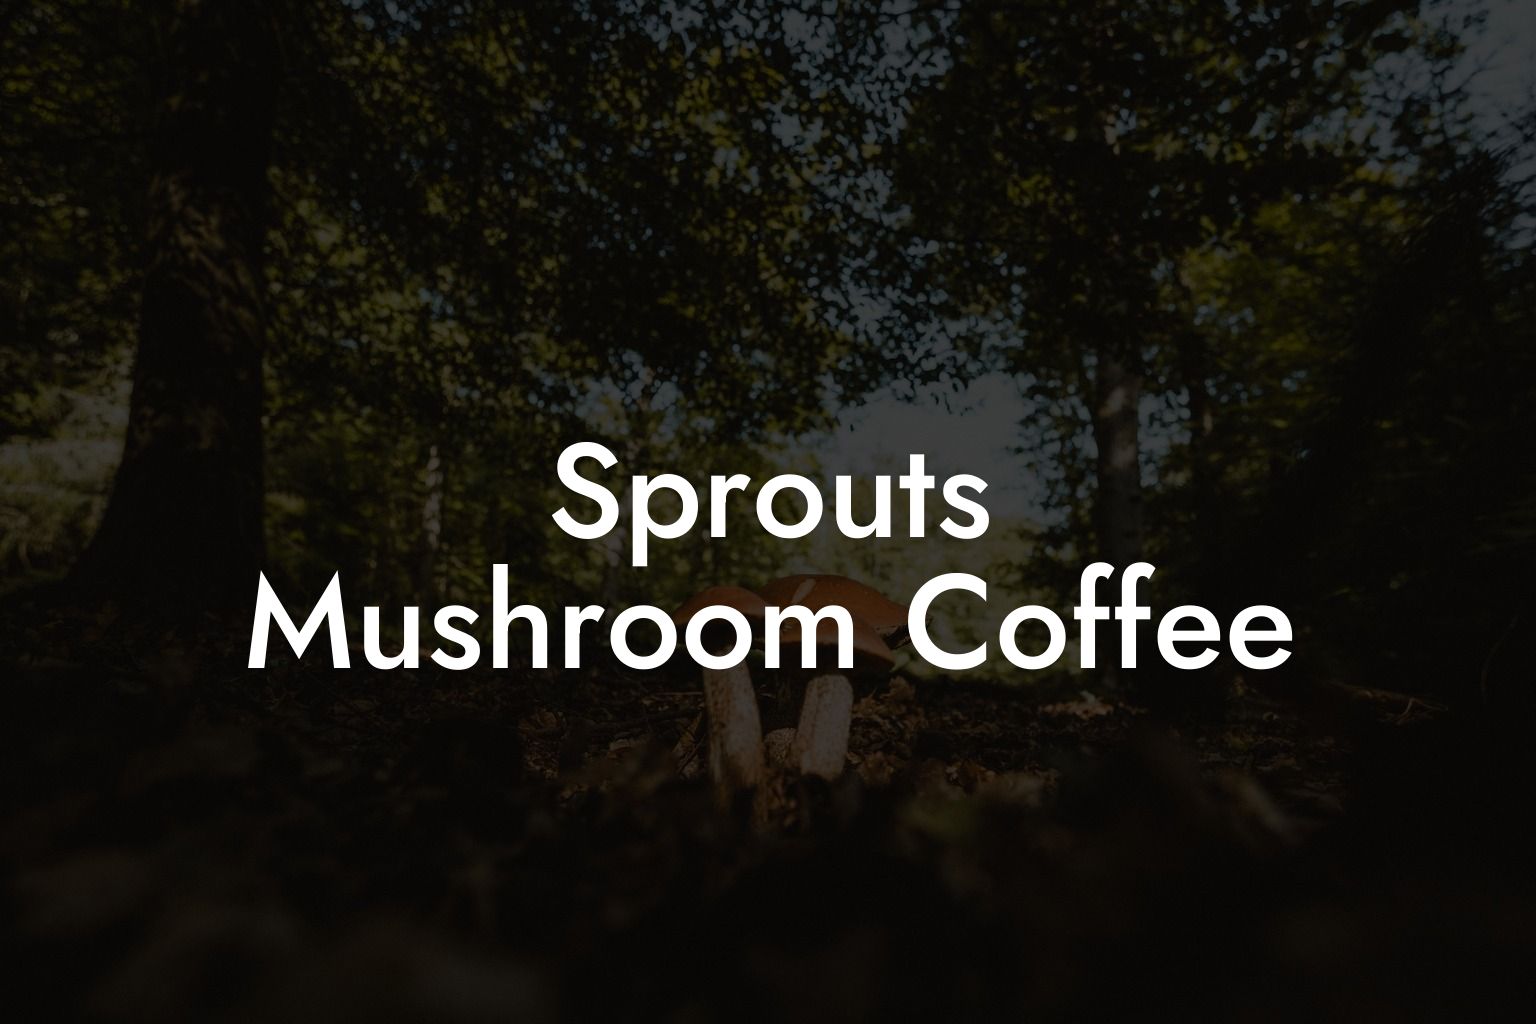 Sprouts Mushroom Coffee